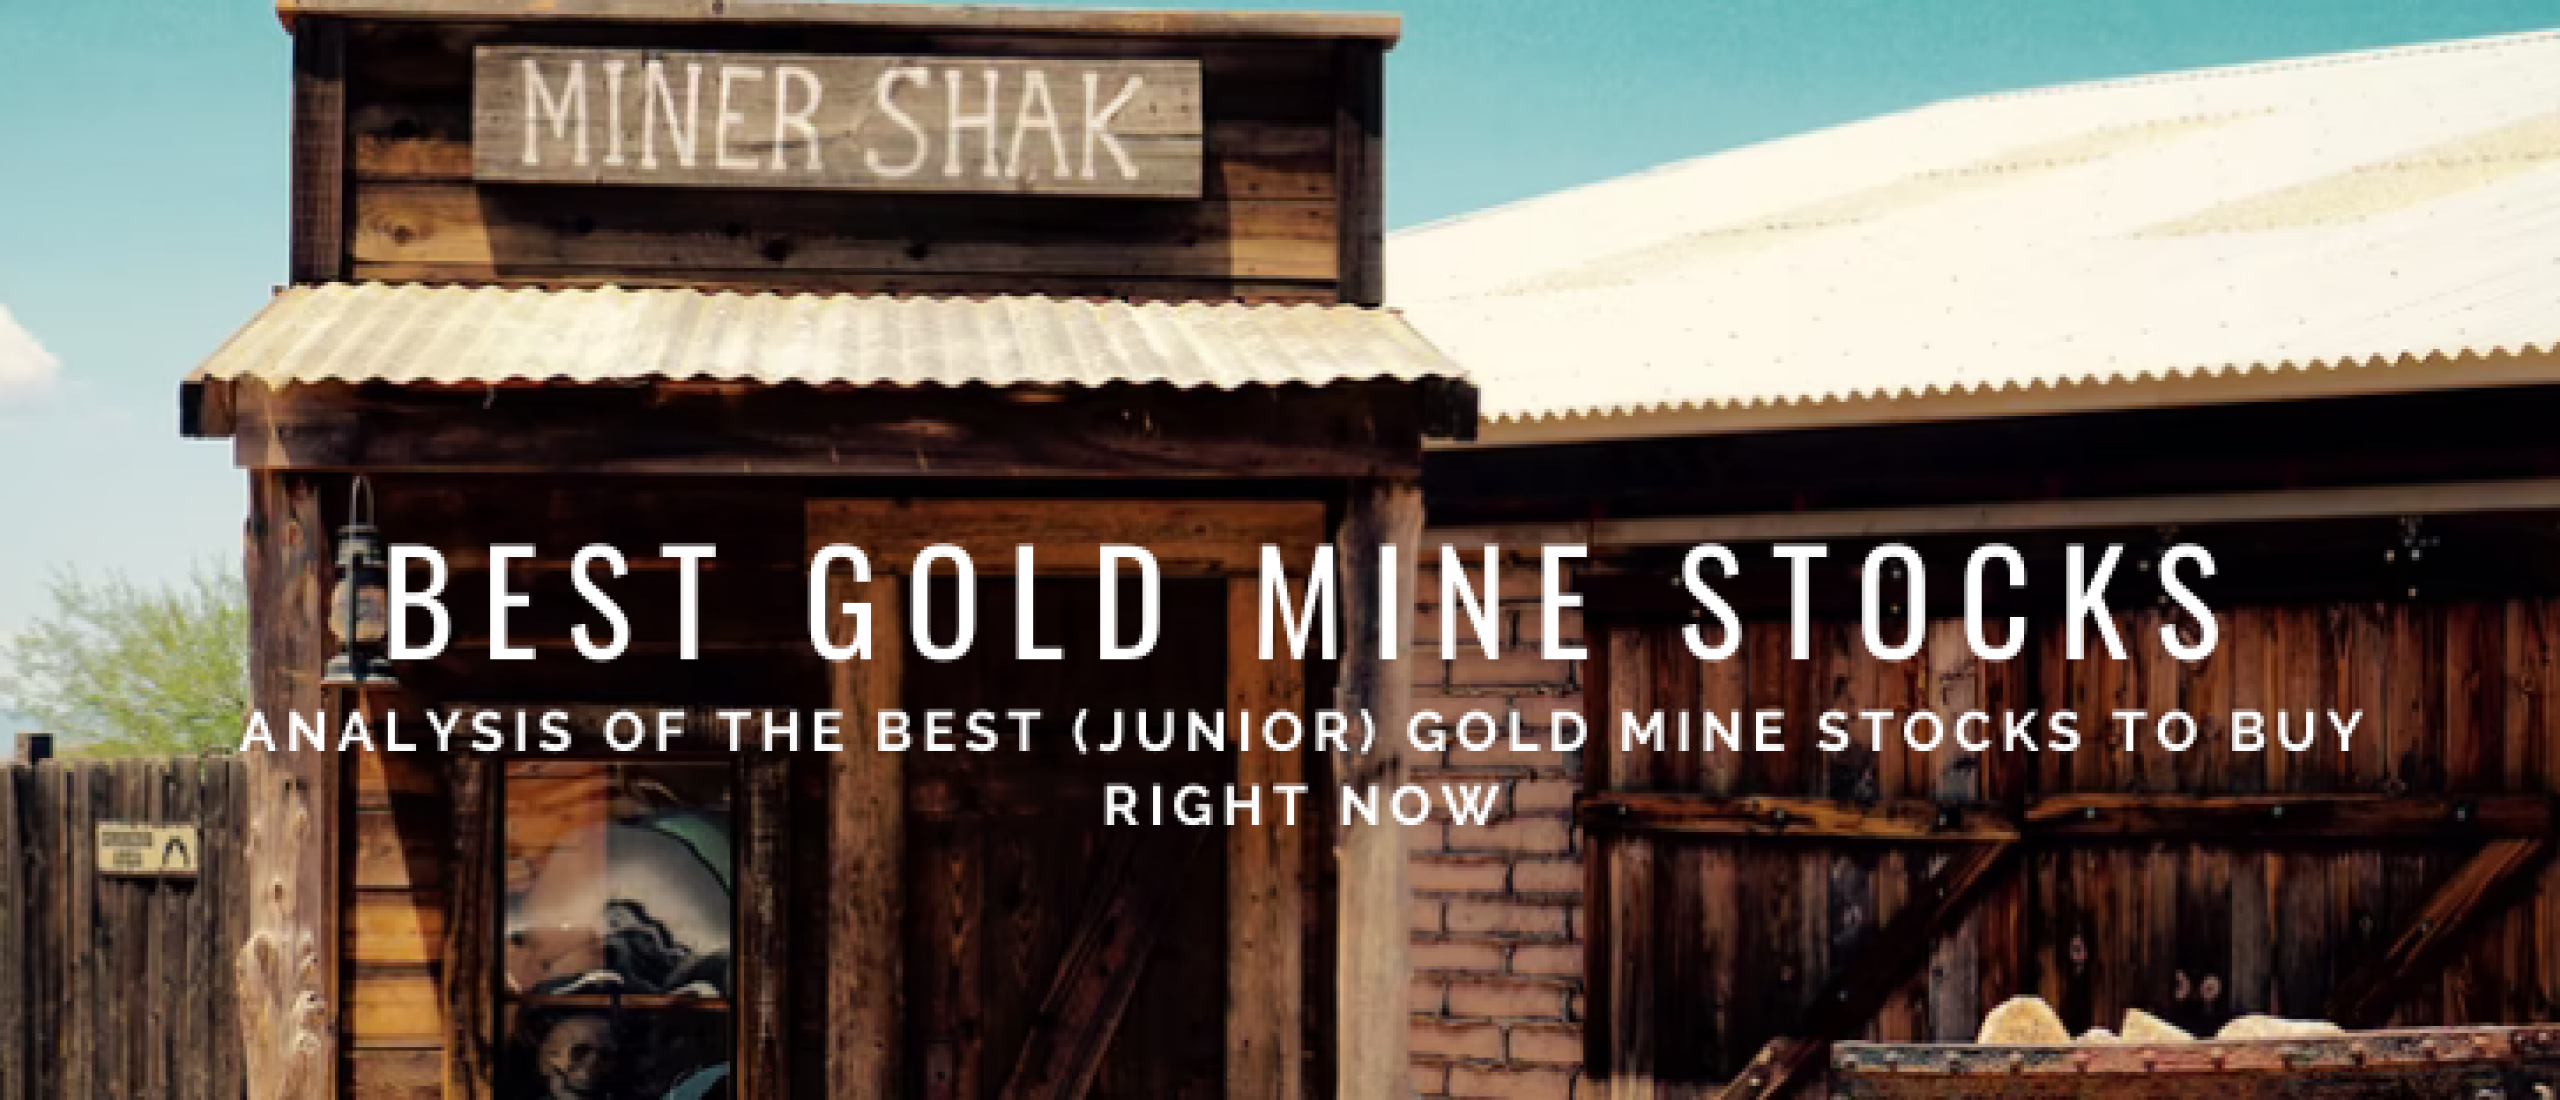 Best Gold Mine Stocks: Analysis TOP 10 Favorite (Junior) Stocks